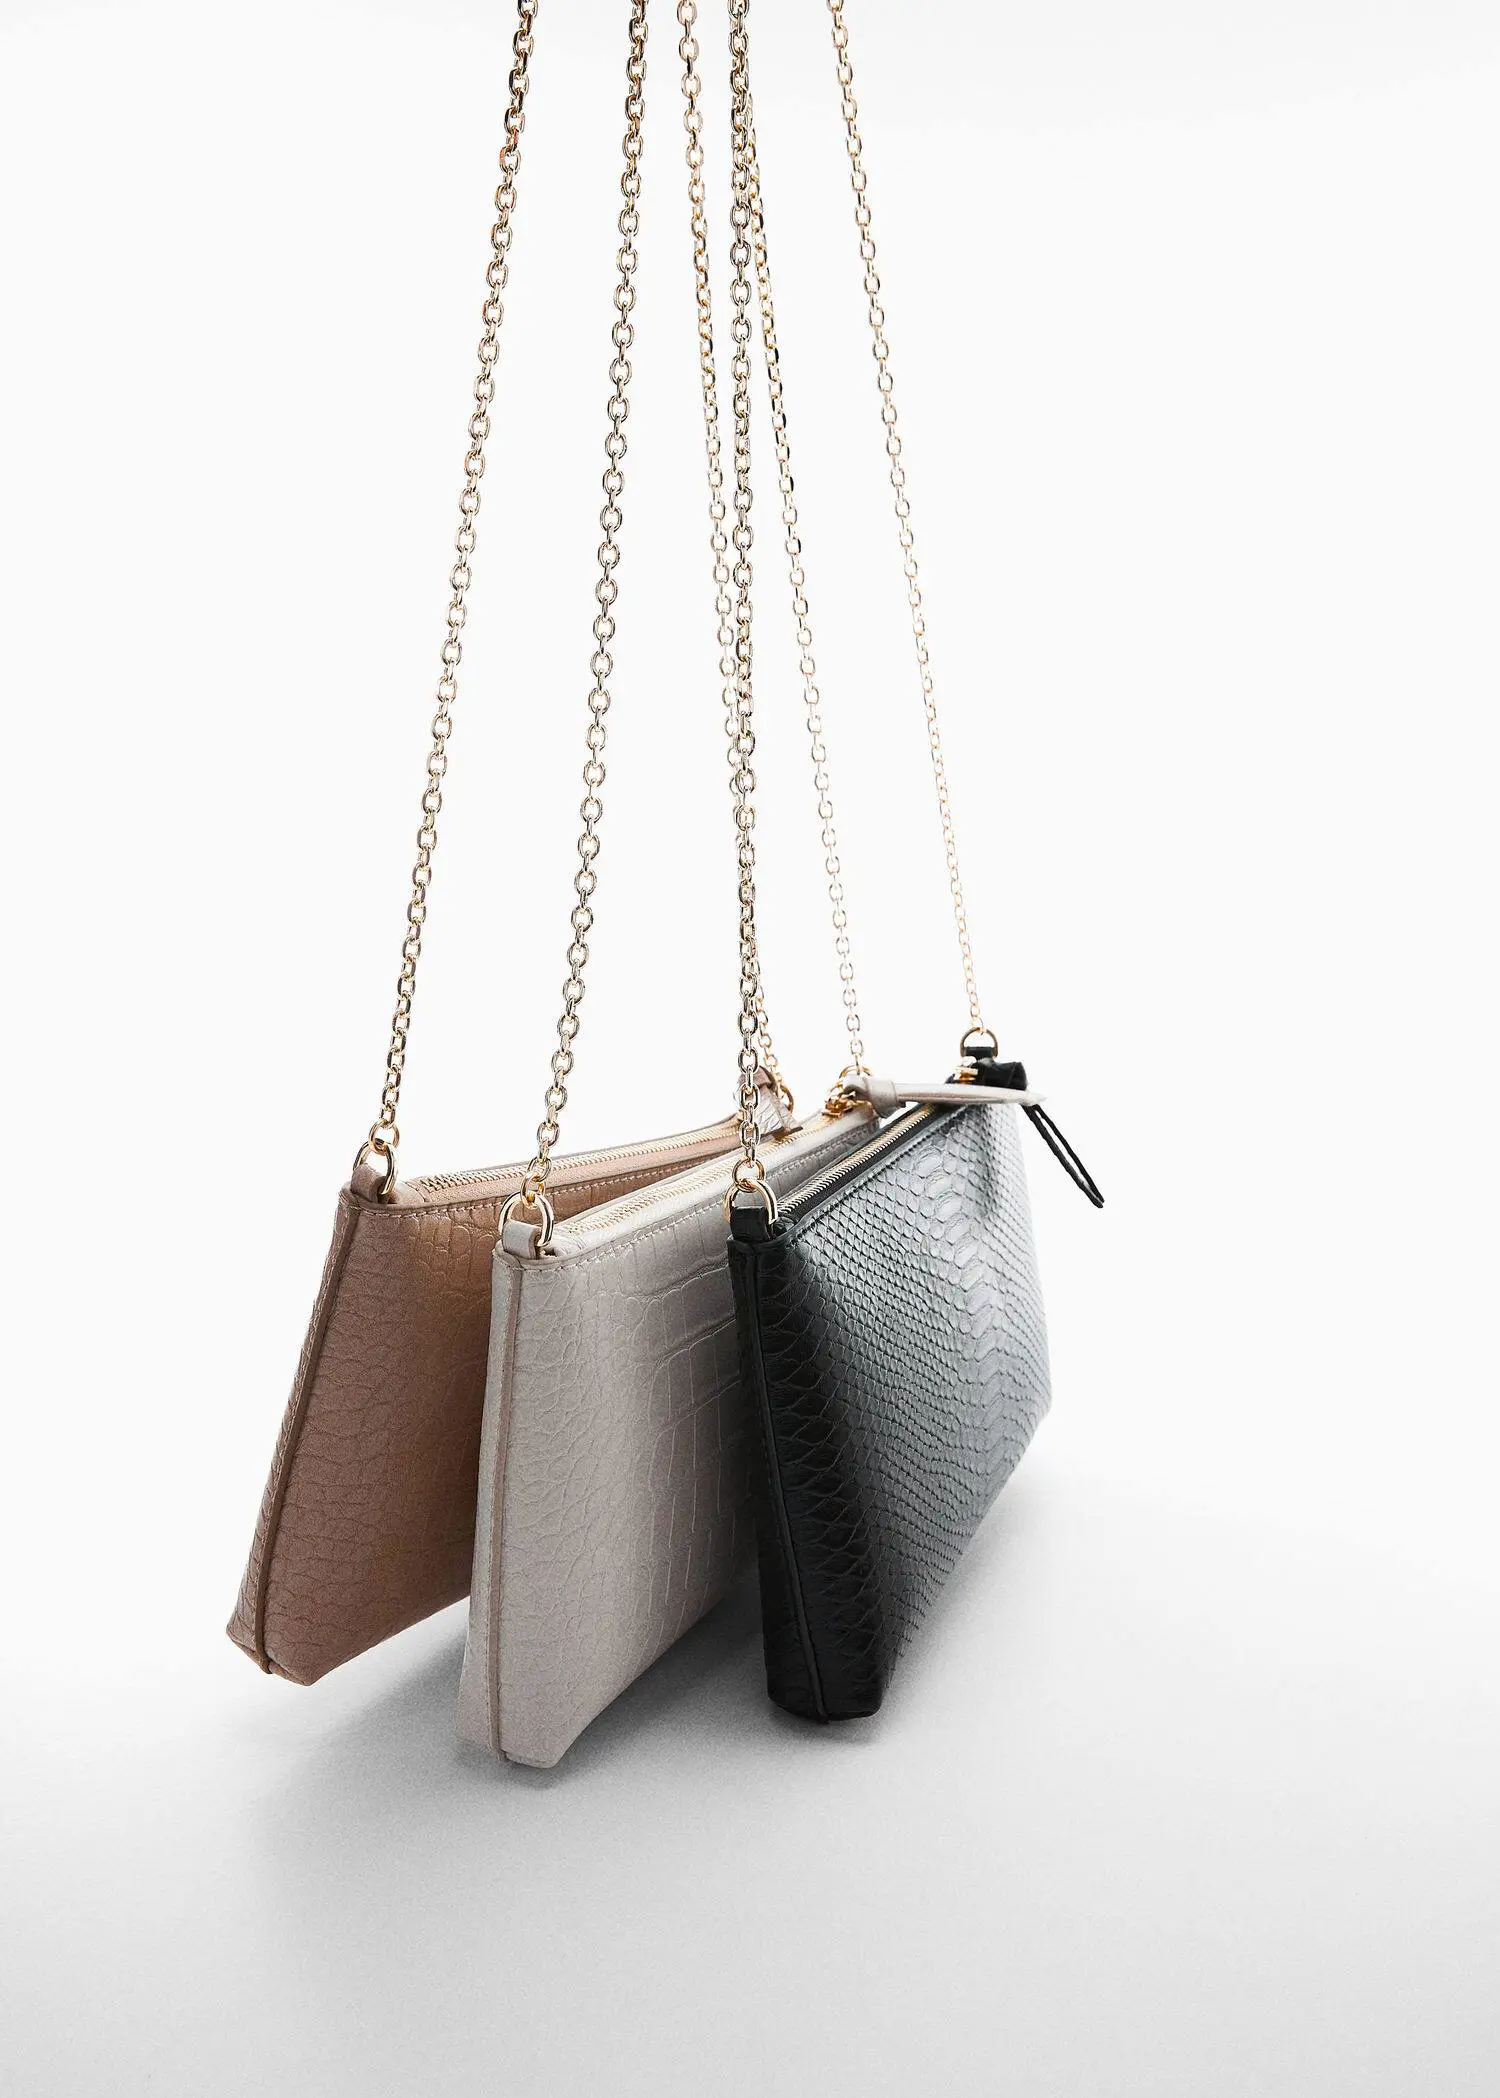 Mango Coco chain bag. a row of three clutches on a white surface. 